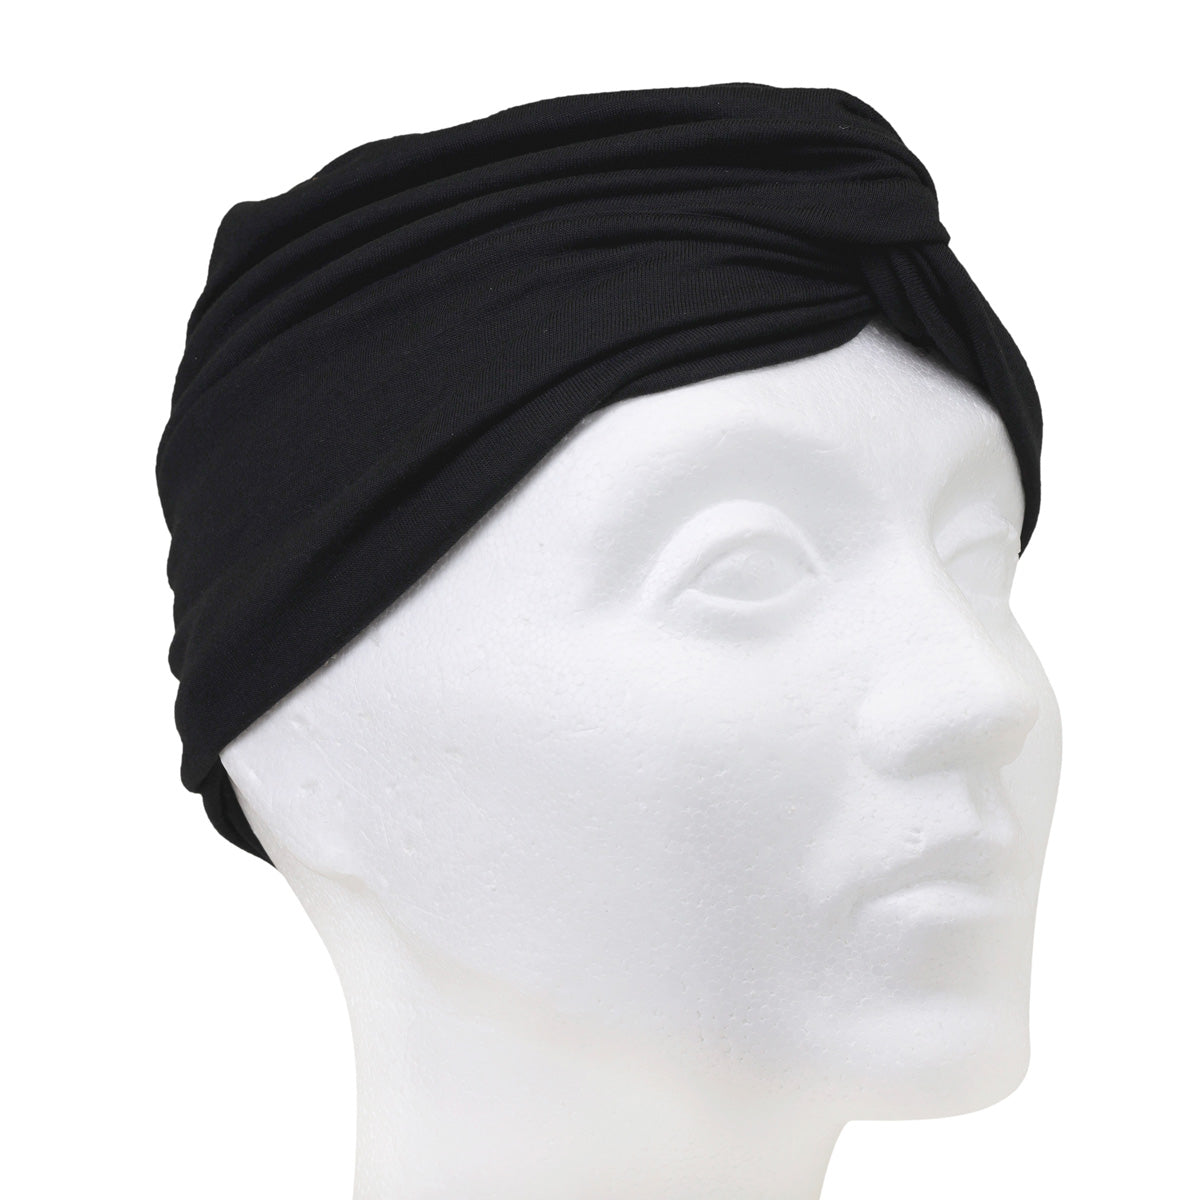 Turban elastic headdress